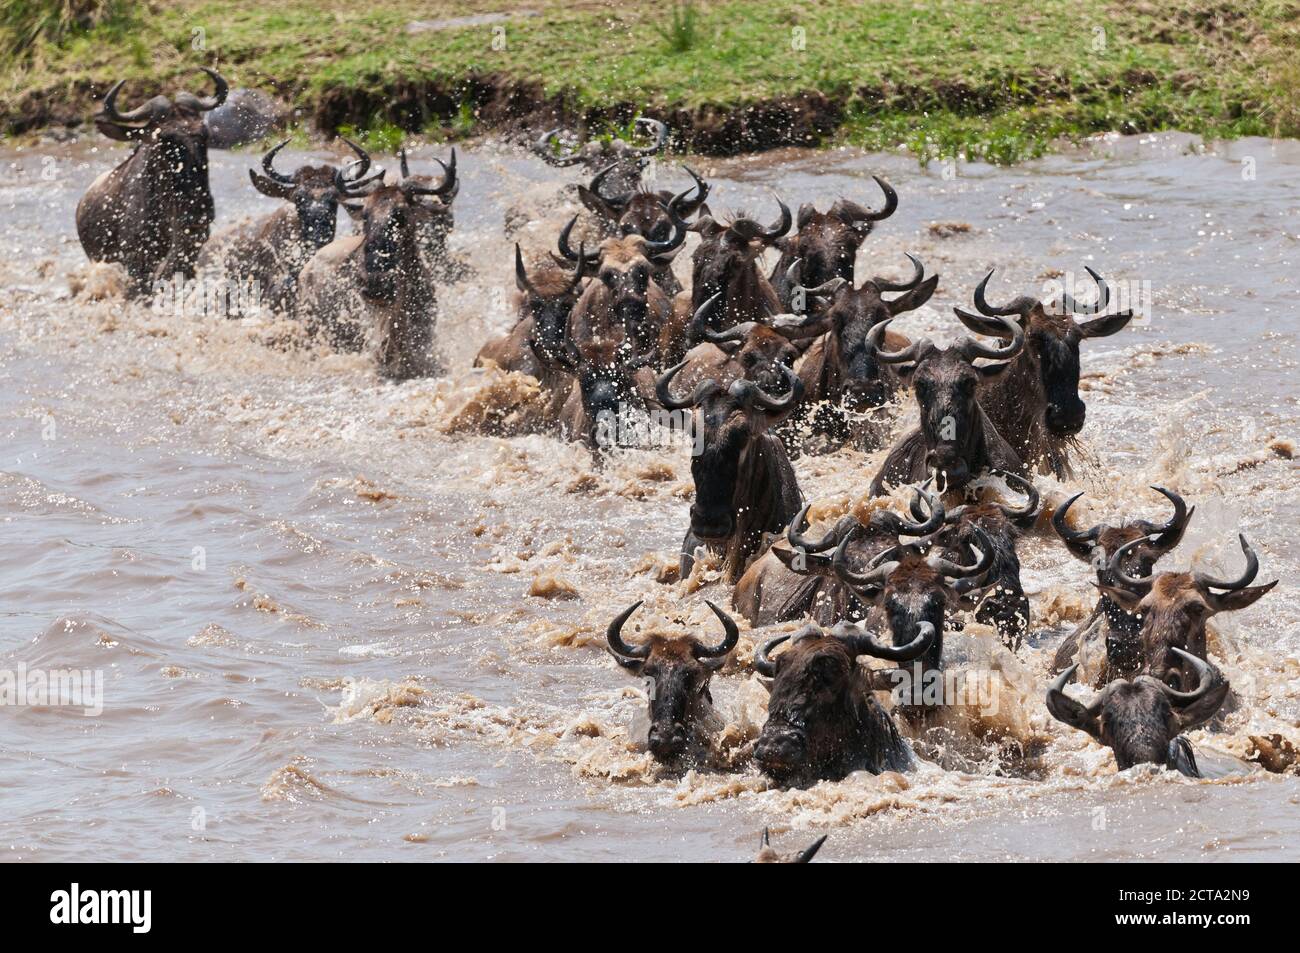 Africa, Kenya, Maasai Mara National Reserve, Blue Wildebeest (Connochaetes taurinus), gnus crossing the Mara River Stock Photo